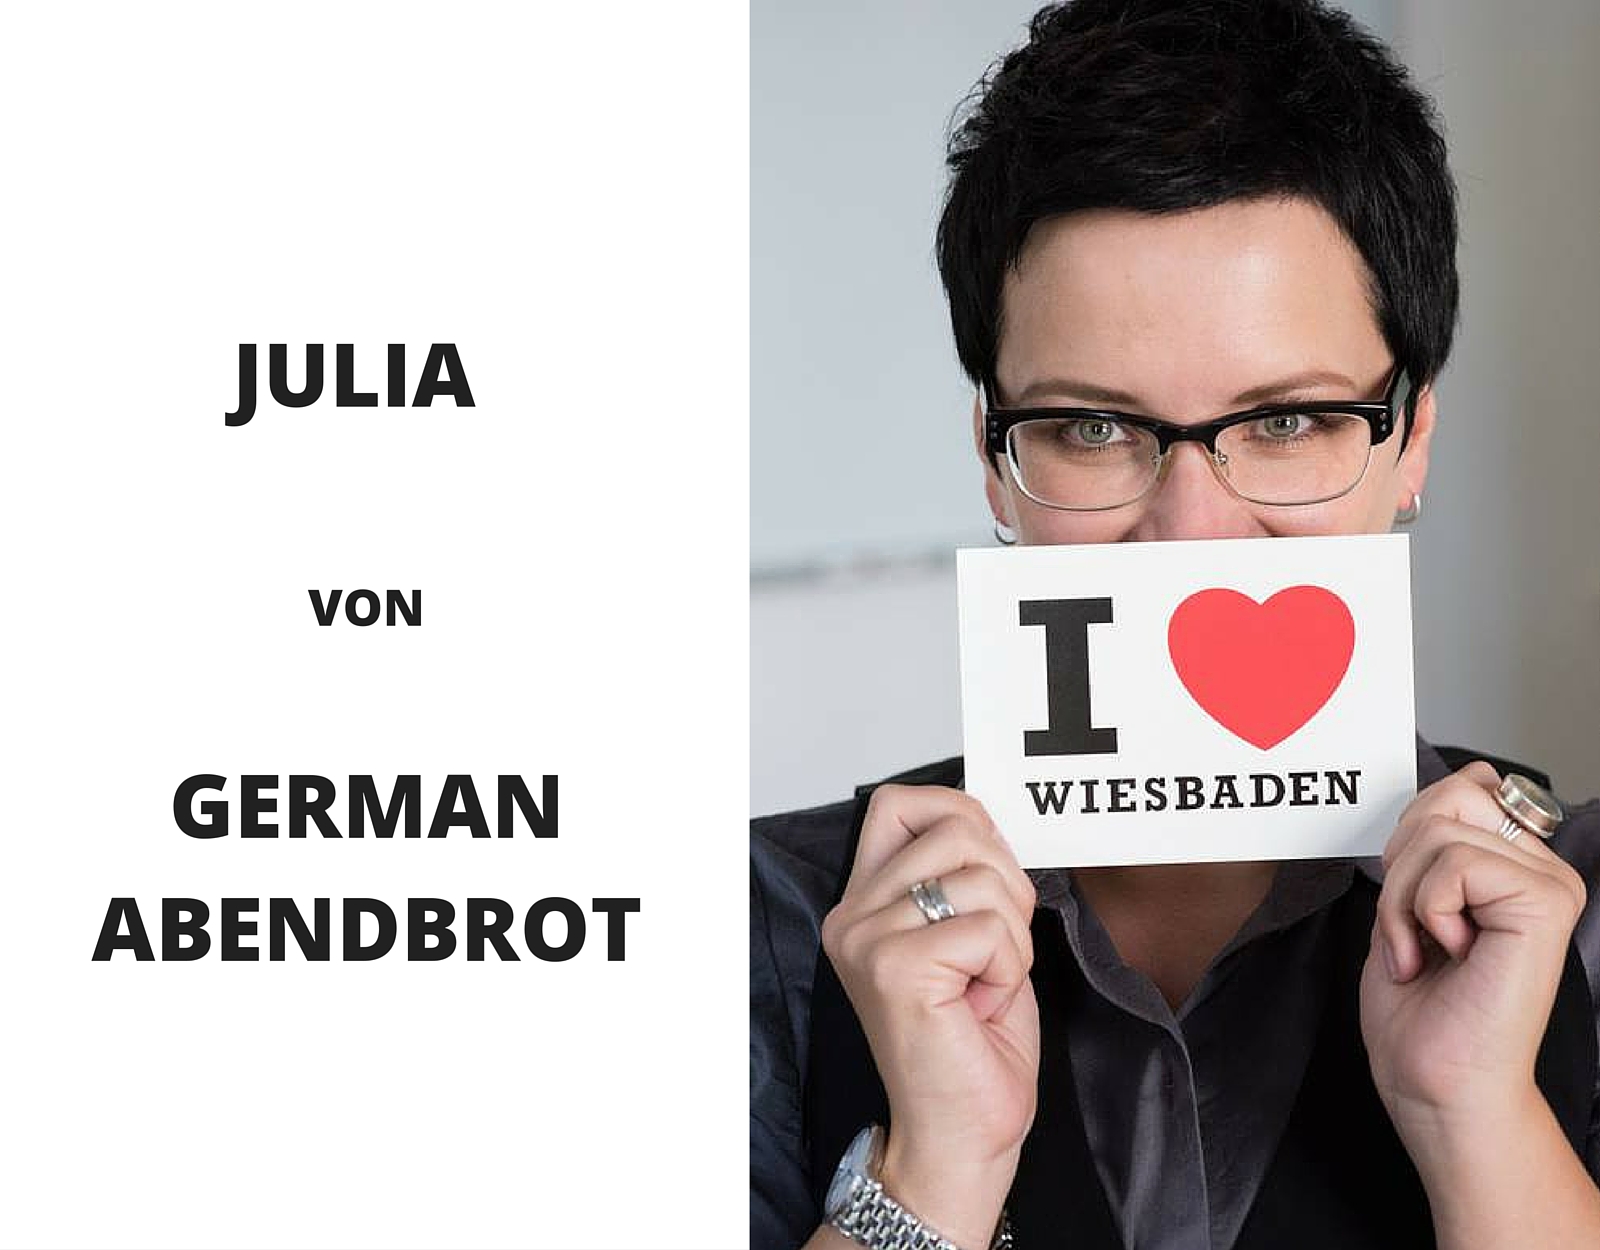 JULIA VON GERMAN ABENDBROT {meet the blogger} I www.blogchicks.de